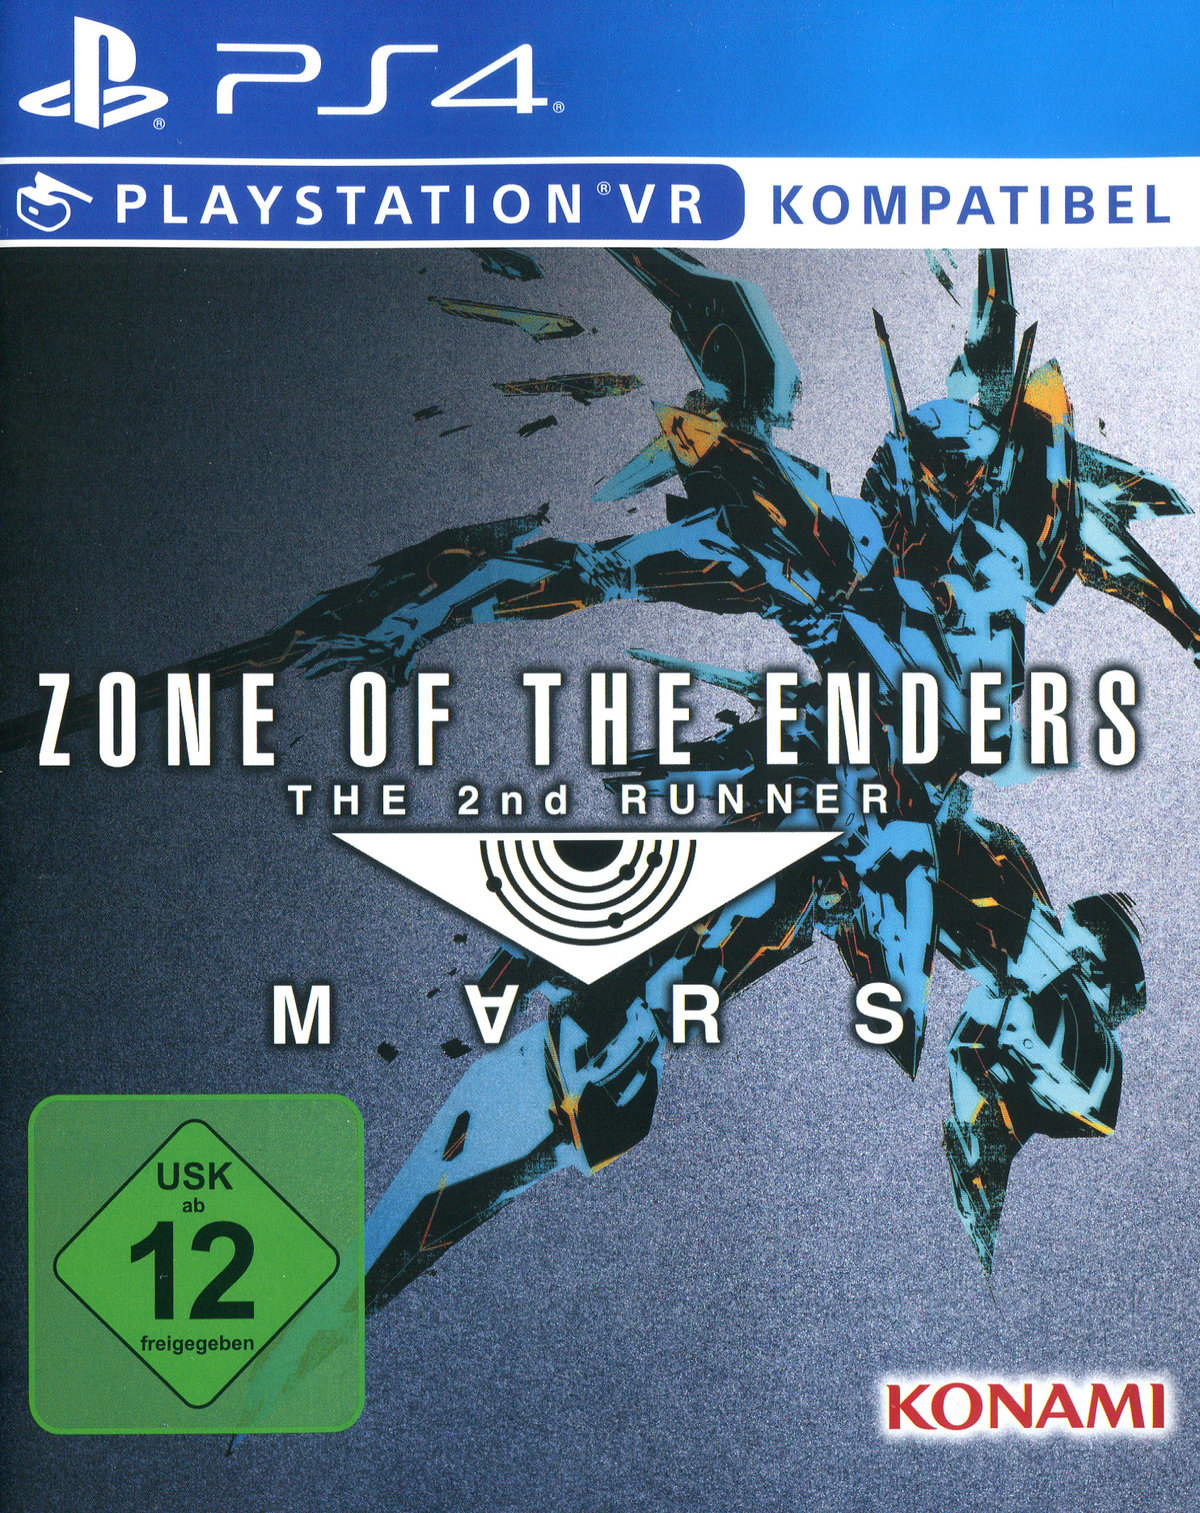 - 2nd MARS Zone Enders VR-kompatibel [PlayStation of Runner Remastered PS-4 4]